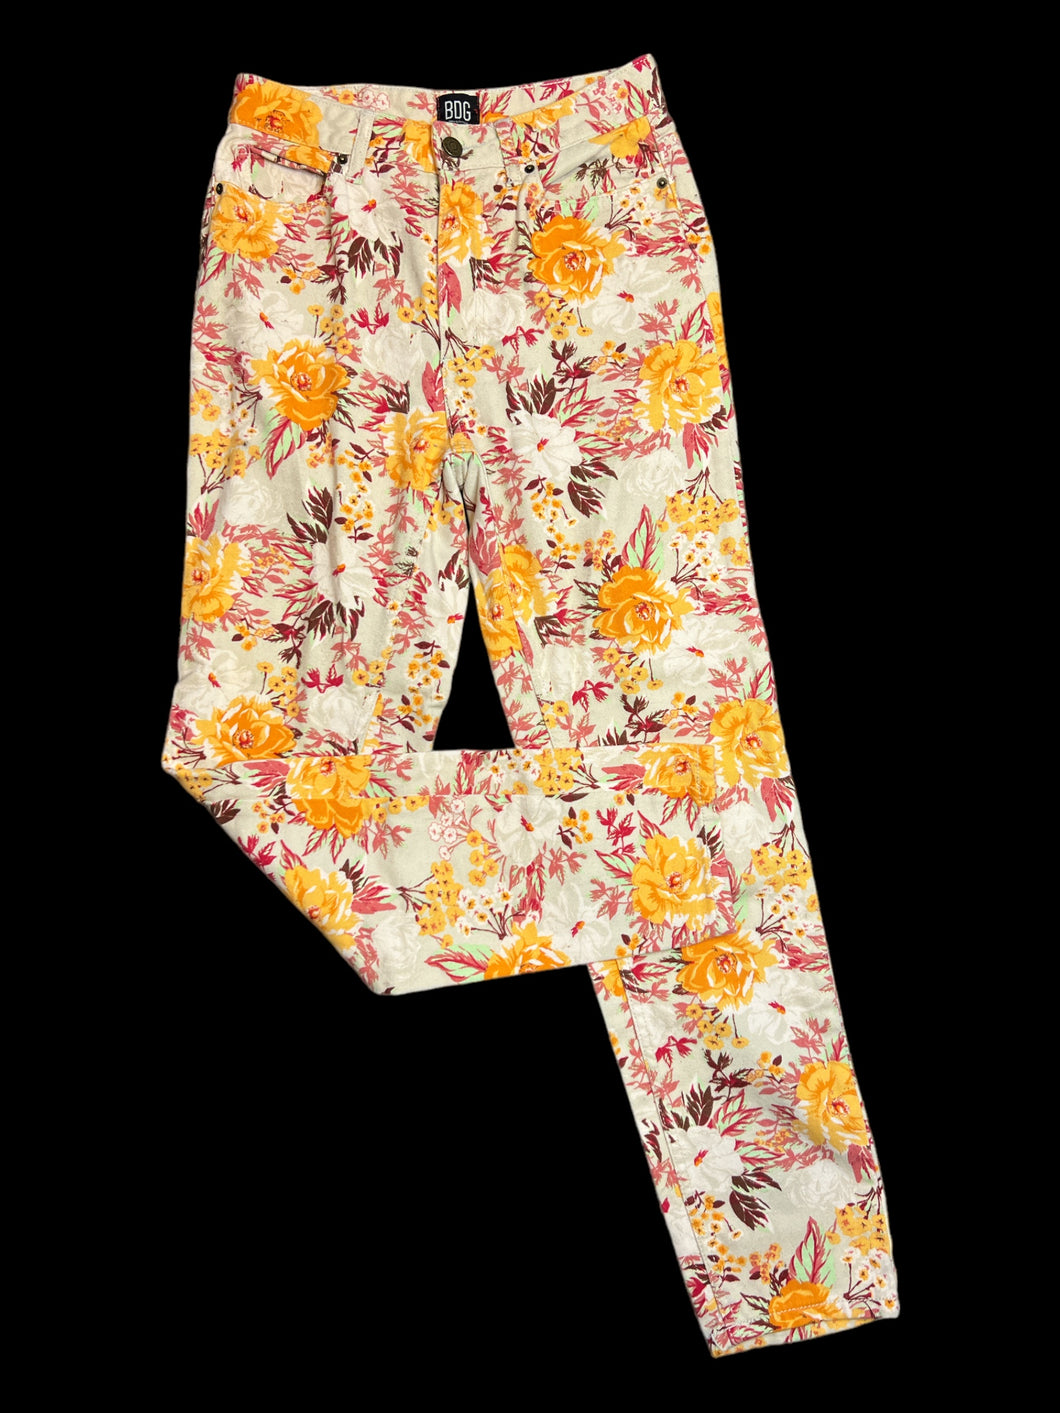 S Off-white & multicolor floral denim high waist taper leg pants w/ pockets, belt loops, & button/zipper closure